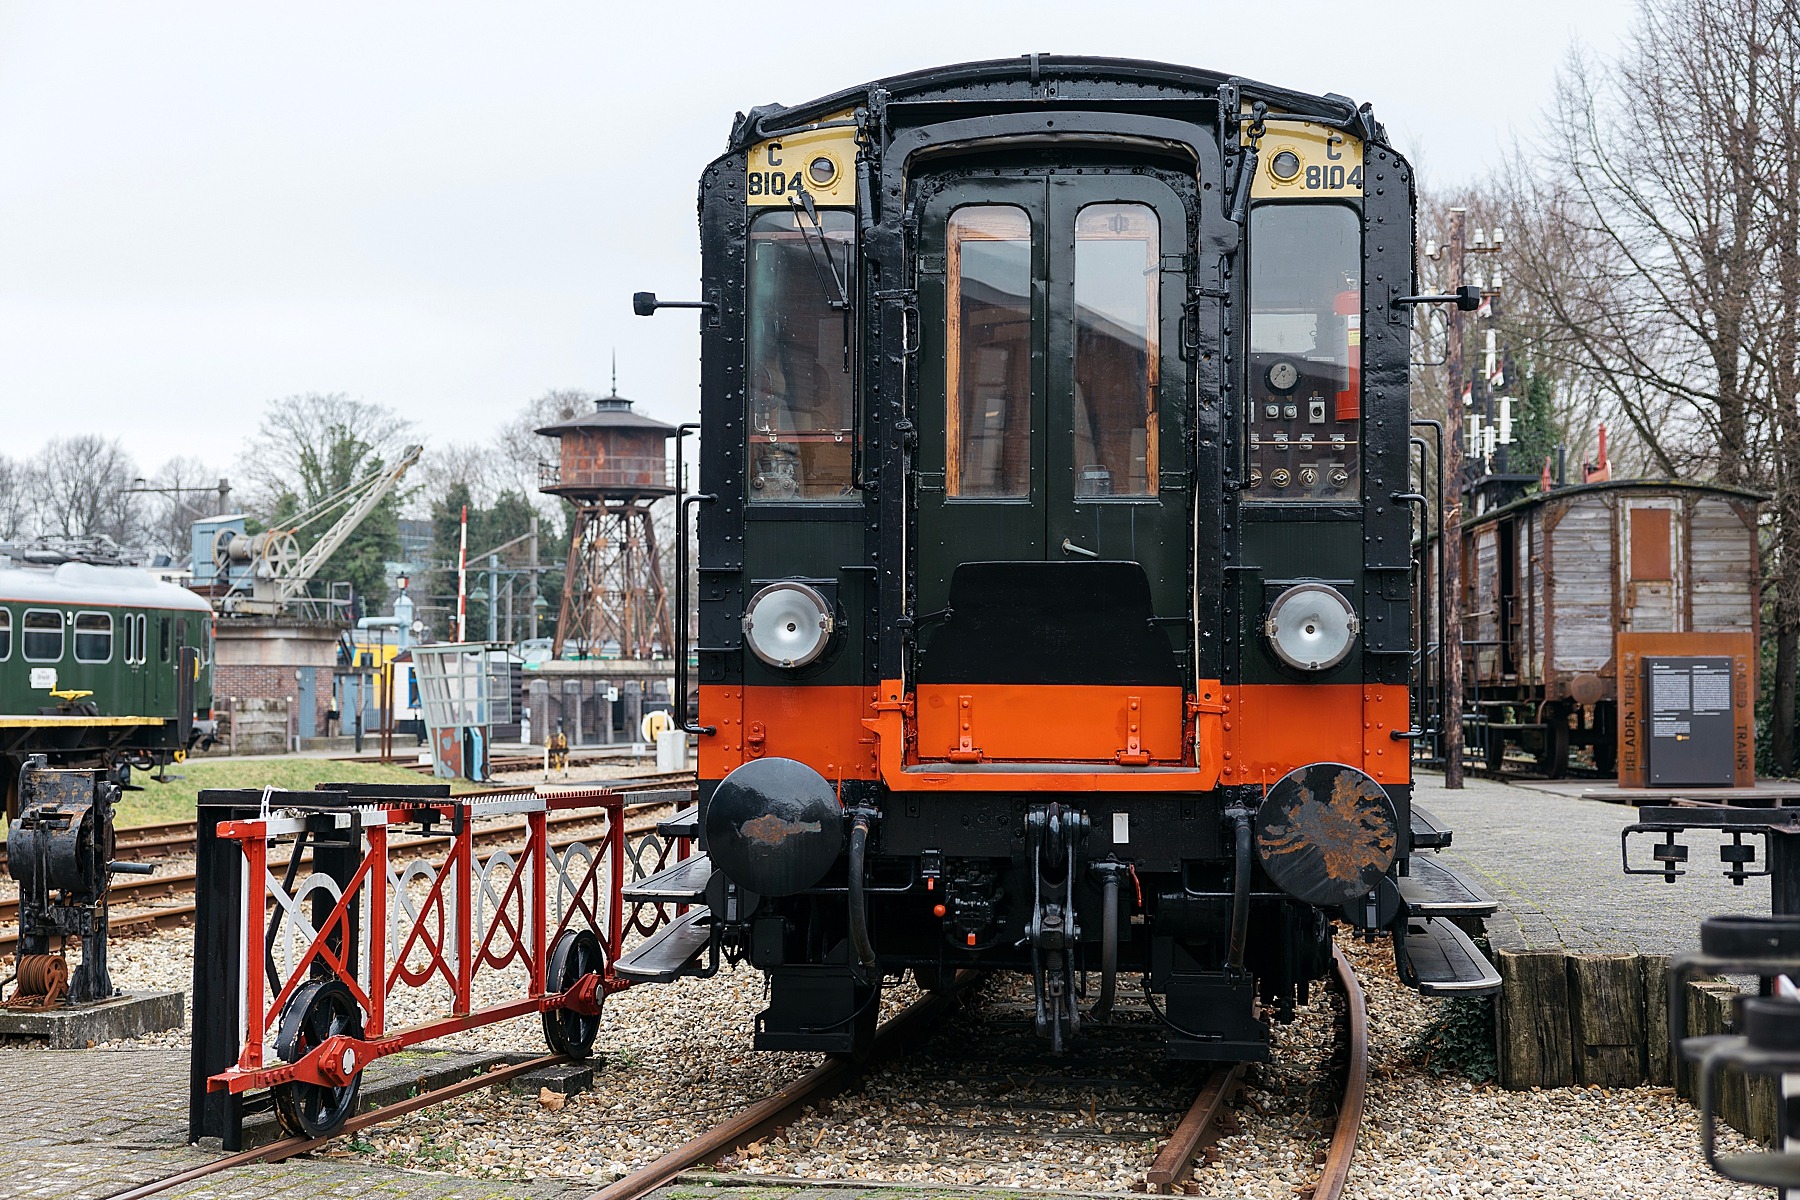 Spoorwegmuseum, l'incroyable musée du train de Utrecht 64